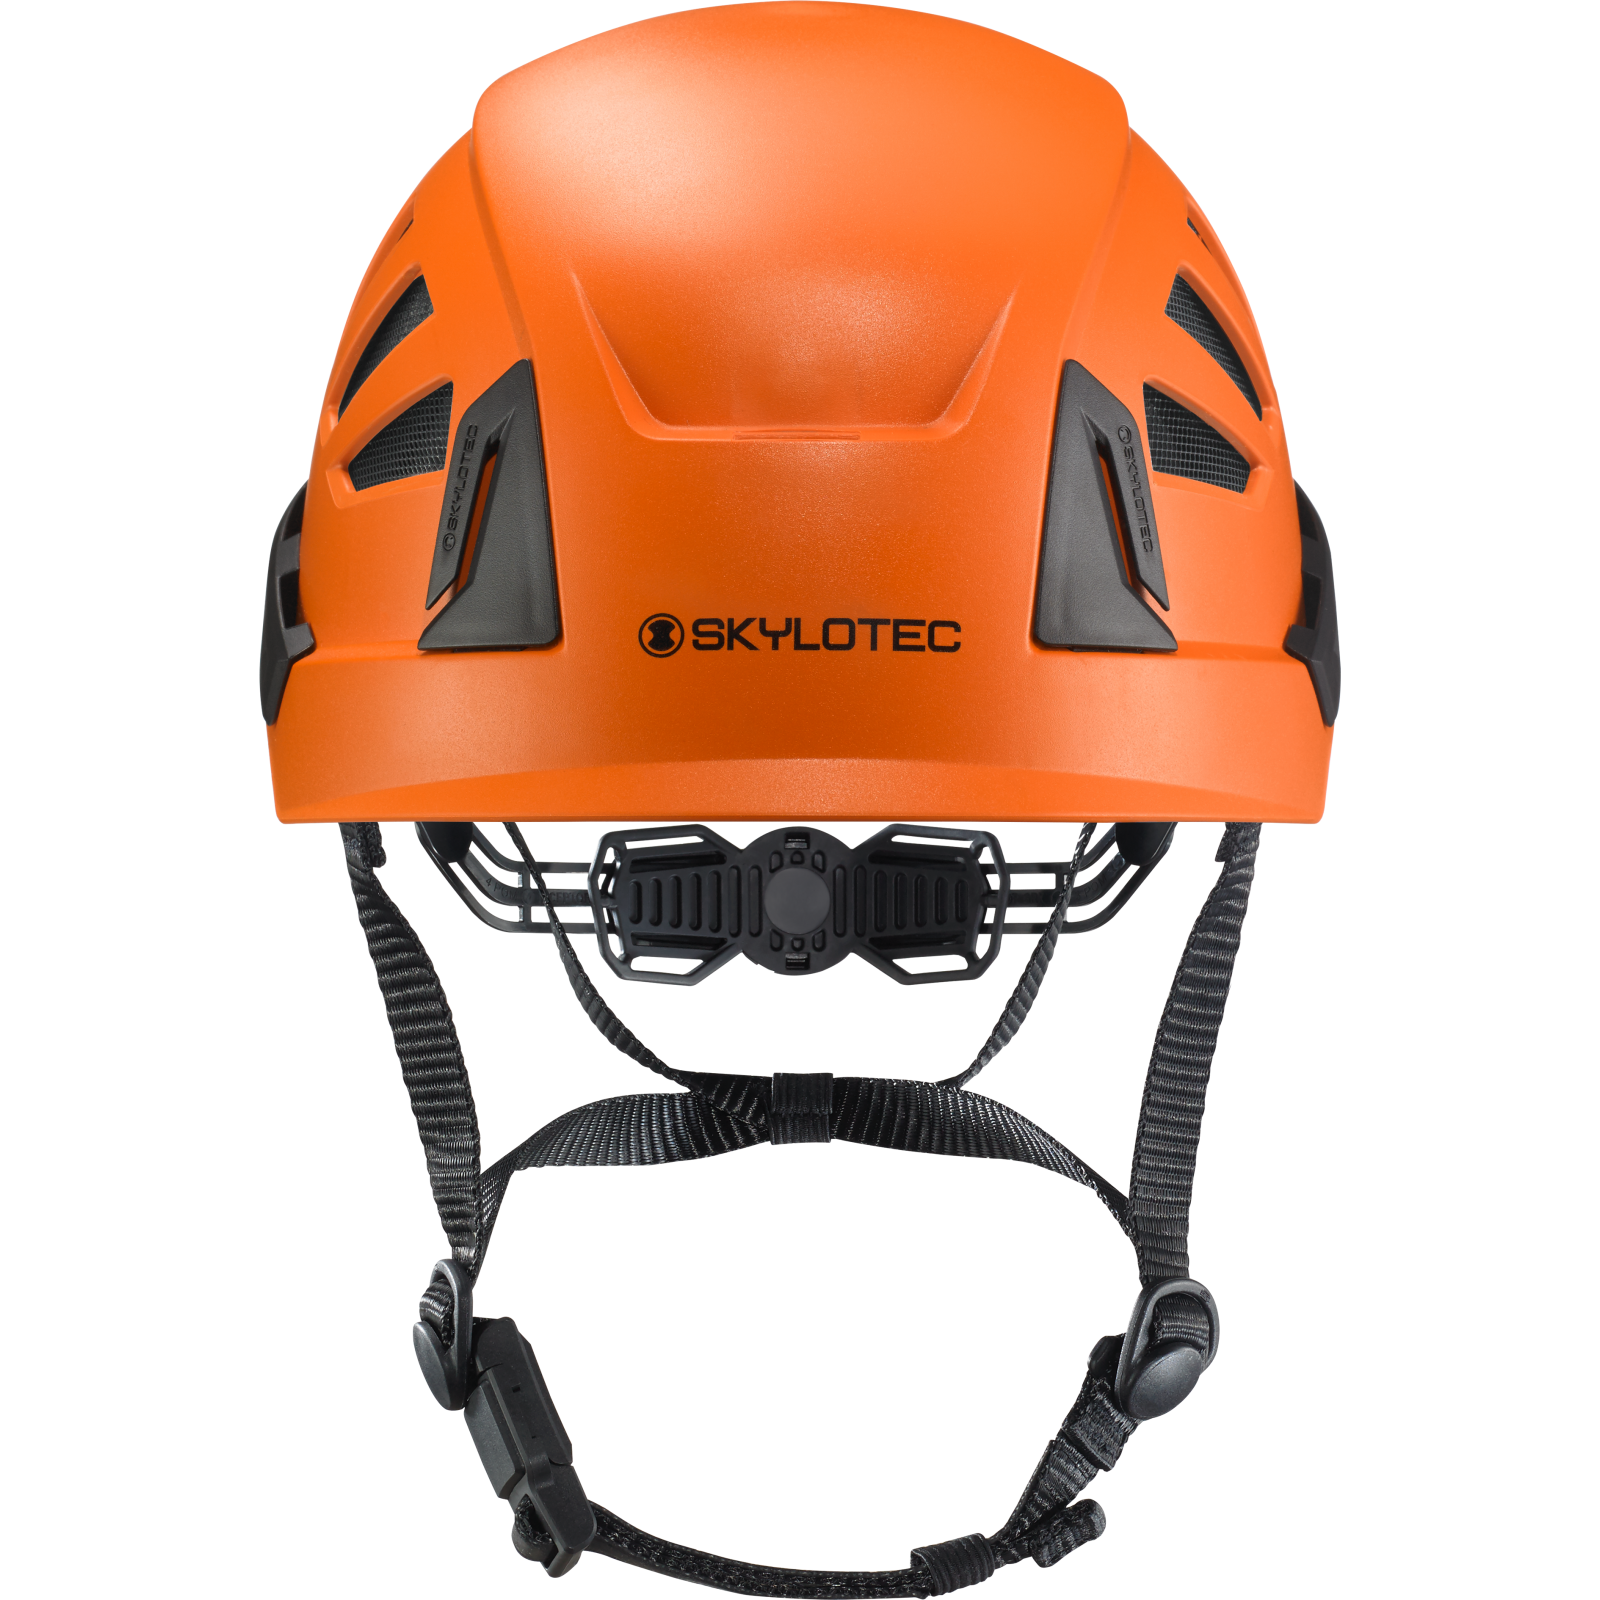 Каска Skylotec Inceptor GRX. GRX 690 Helmet. Каска (оранжевая). Шлем безопасности.